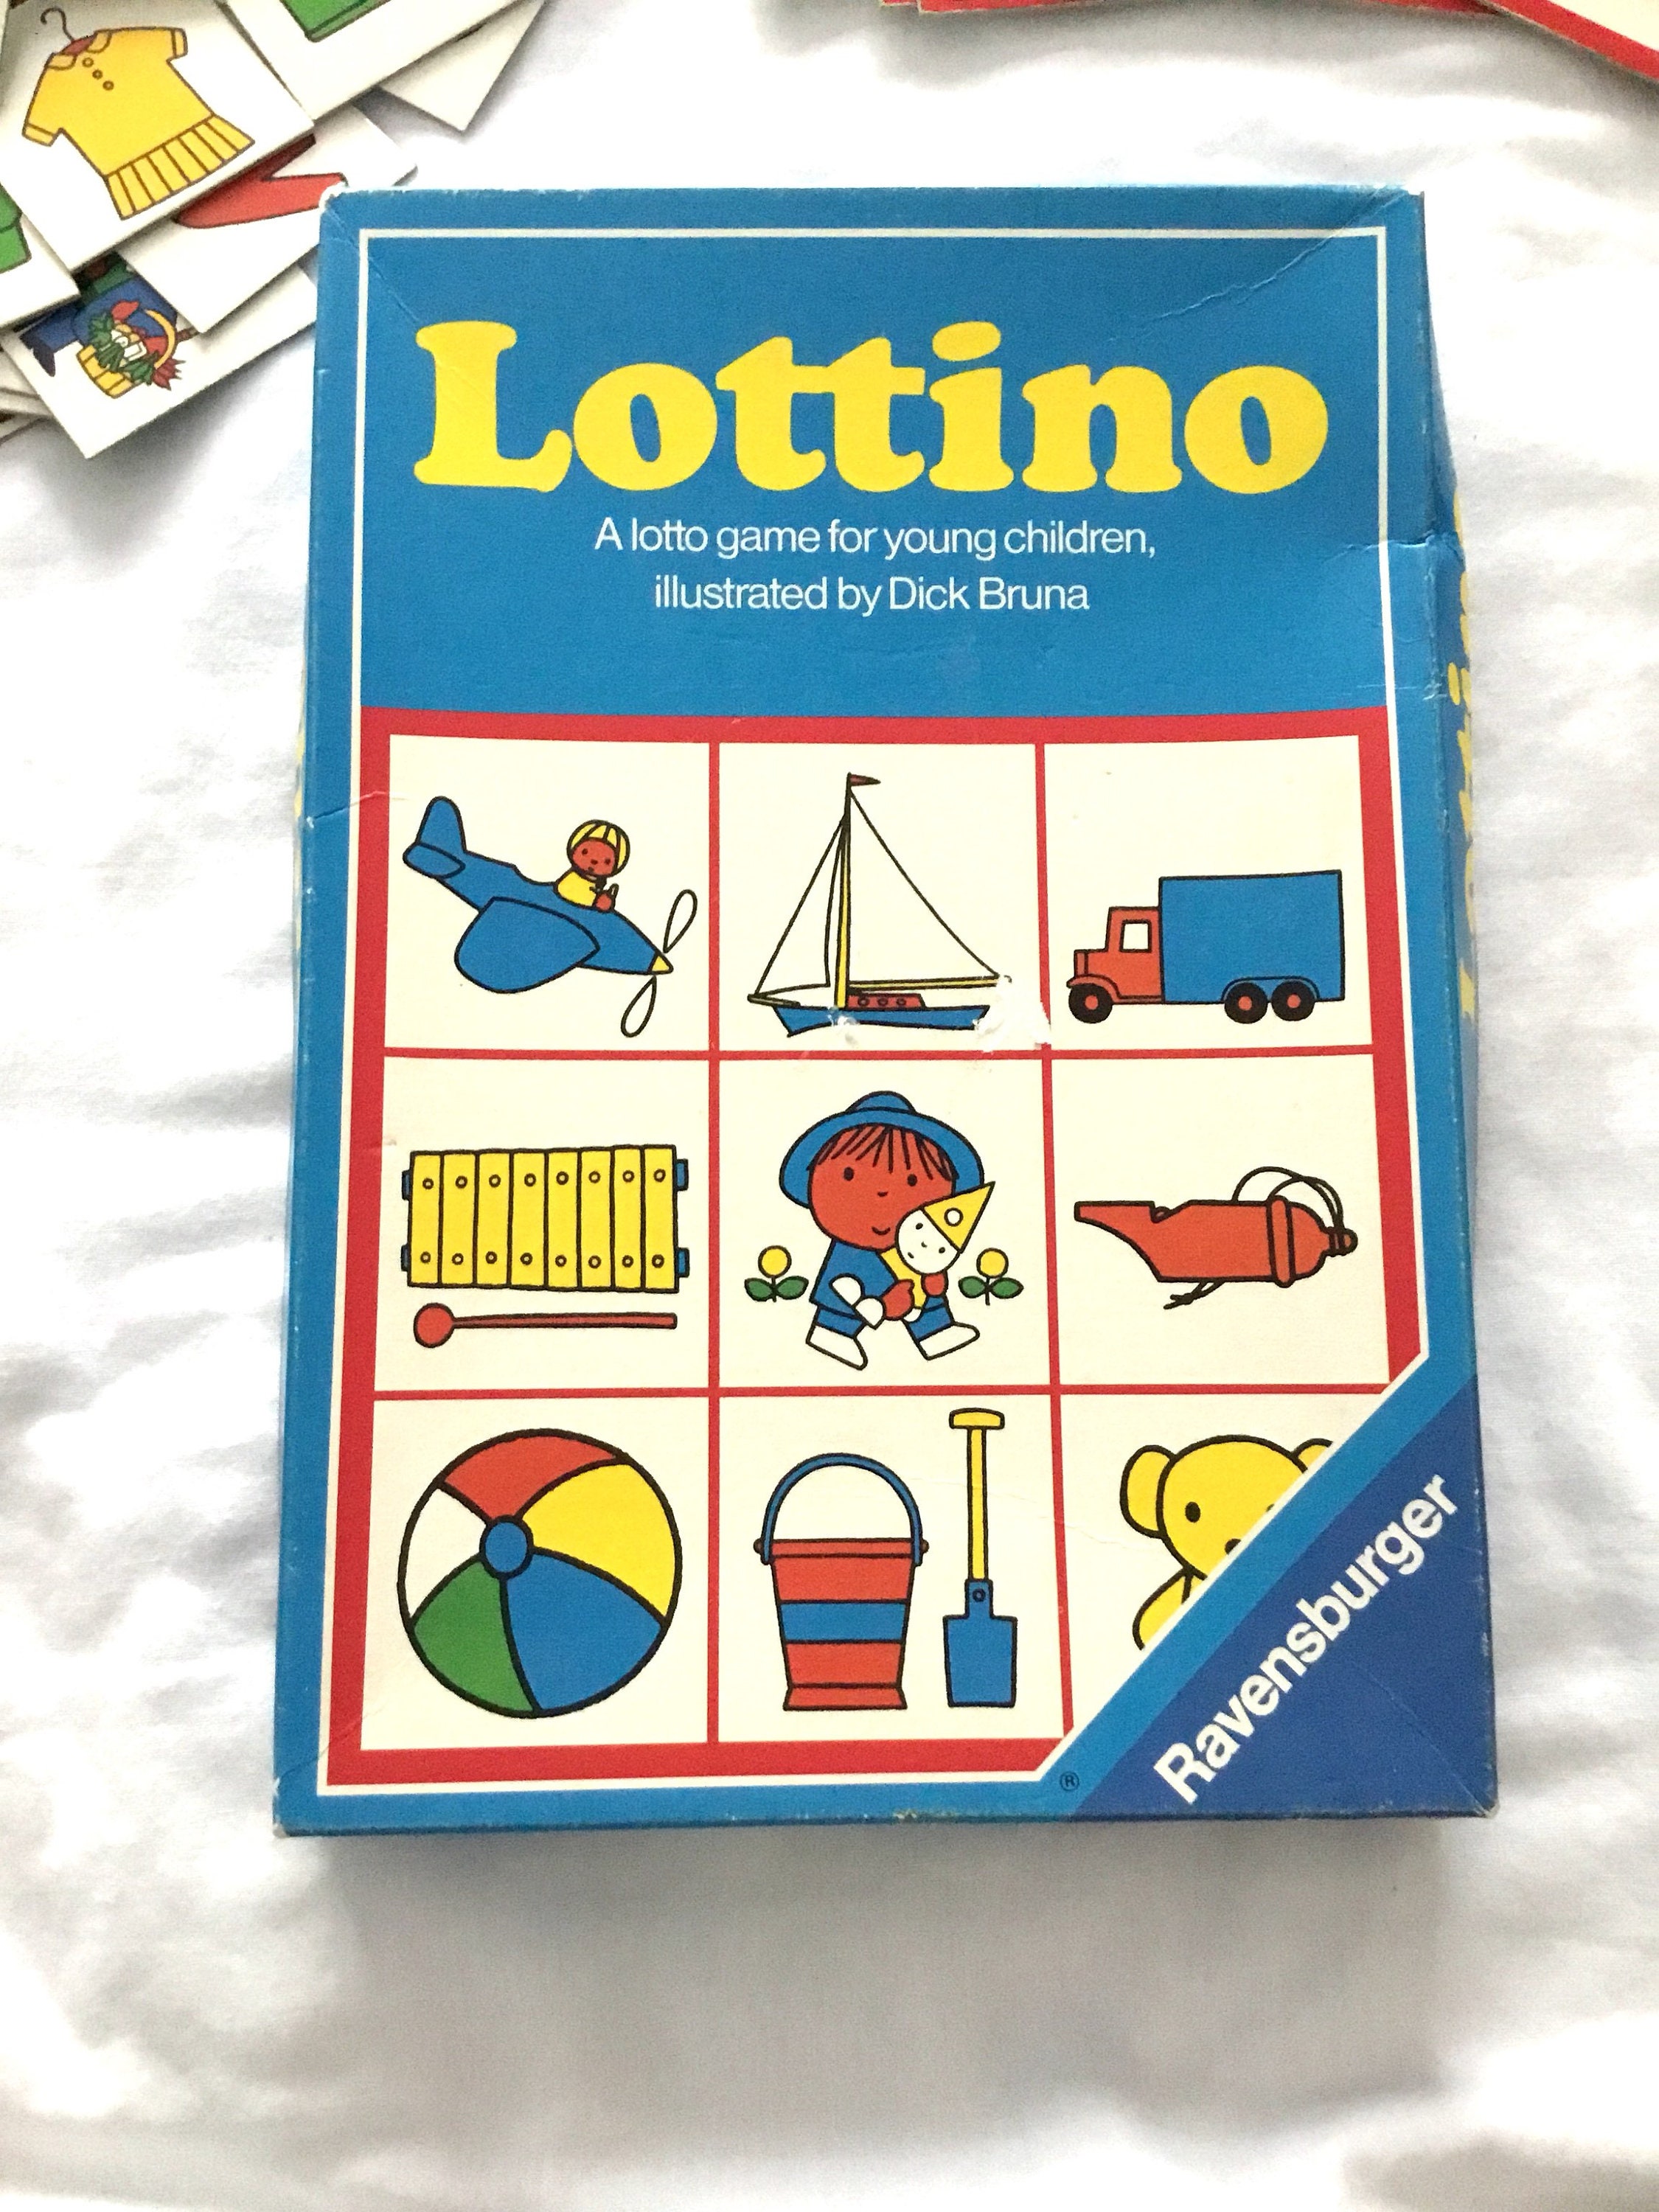 Mantel Vernederen oortelefoon Ravensburger 1982 Lottino Illustrated by Dick Bruna Lotto Game - Etsy